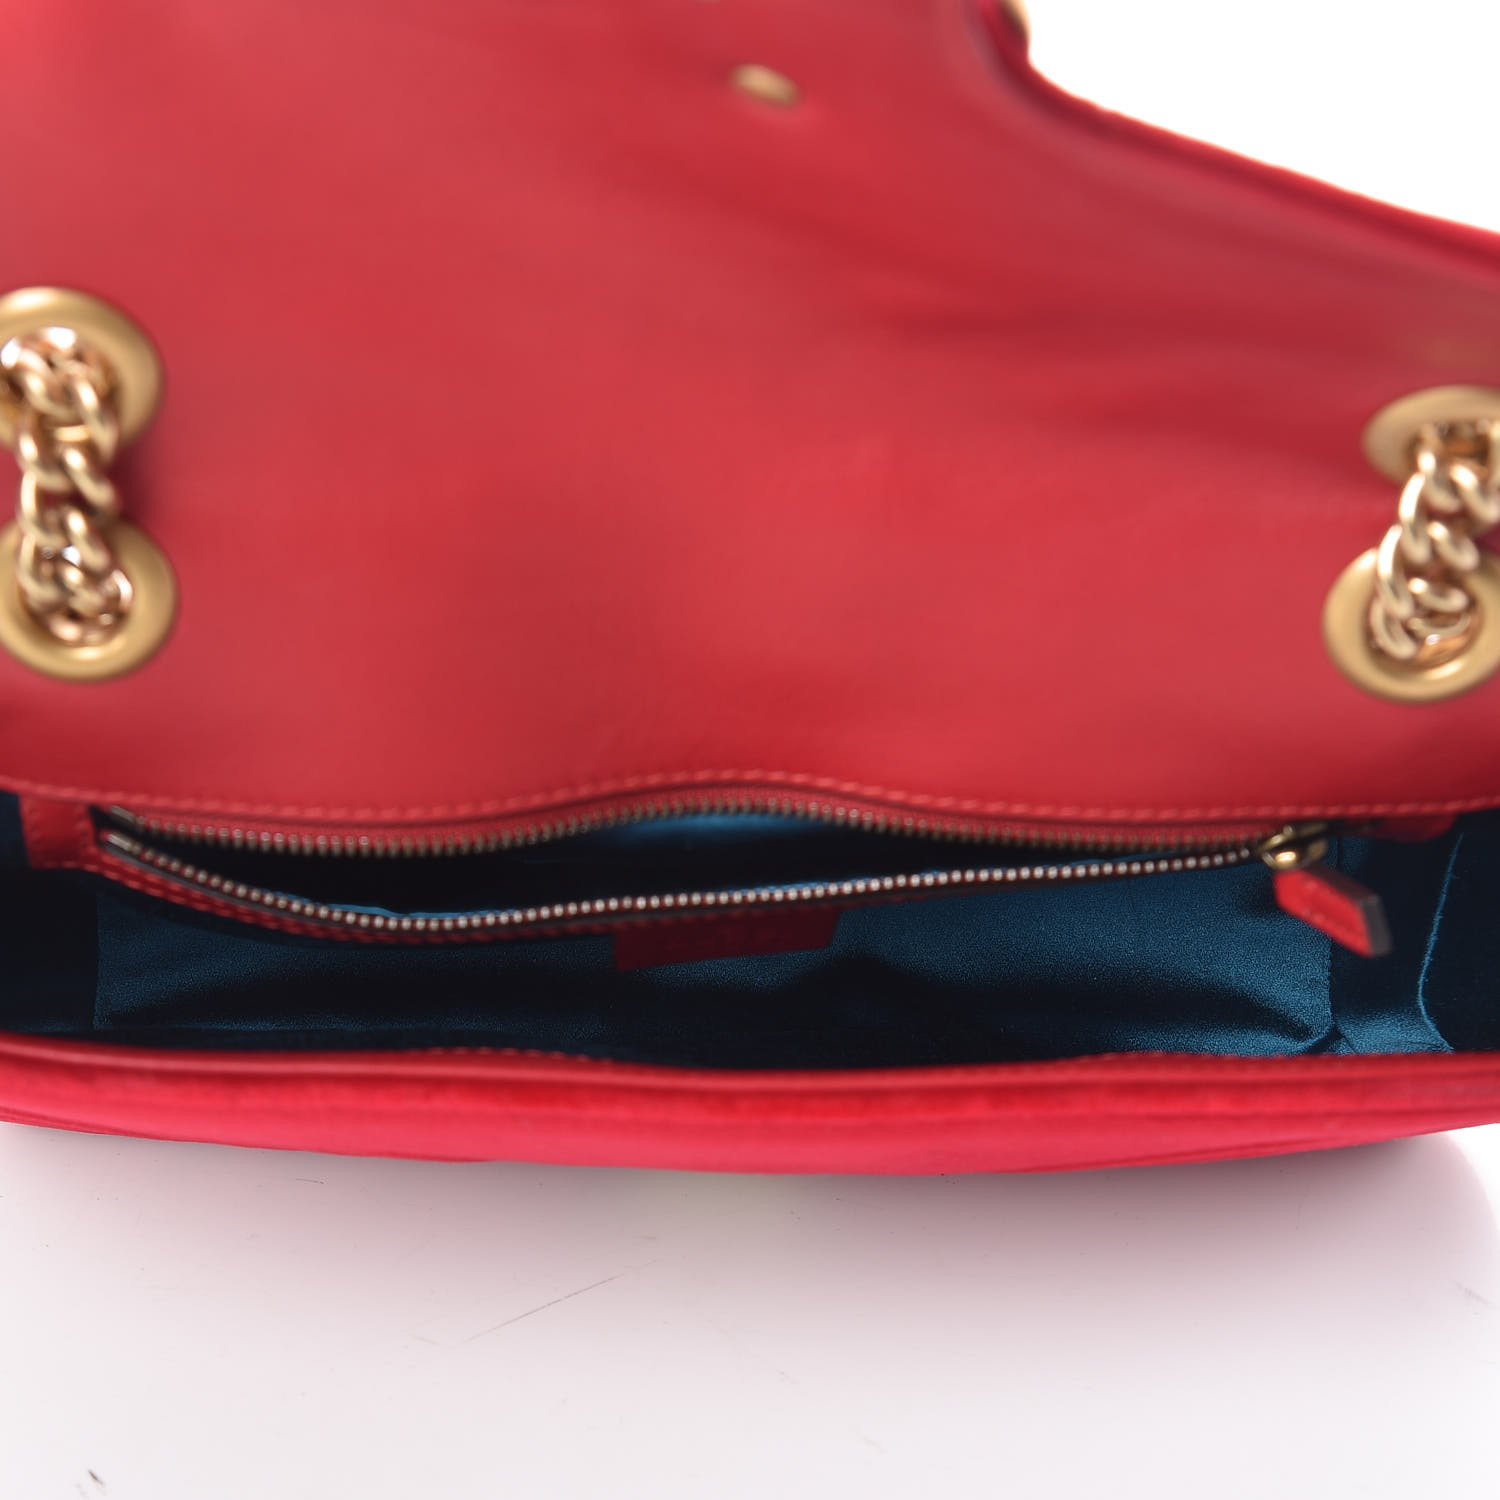 GUCCI Velvet Matelasse Small GG Marmont Shoulder Bag Hibiscus Red 426358